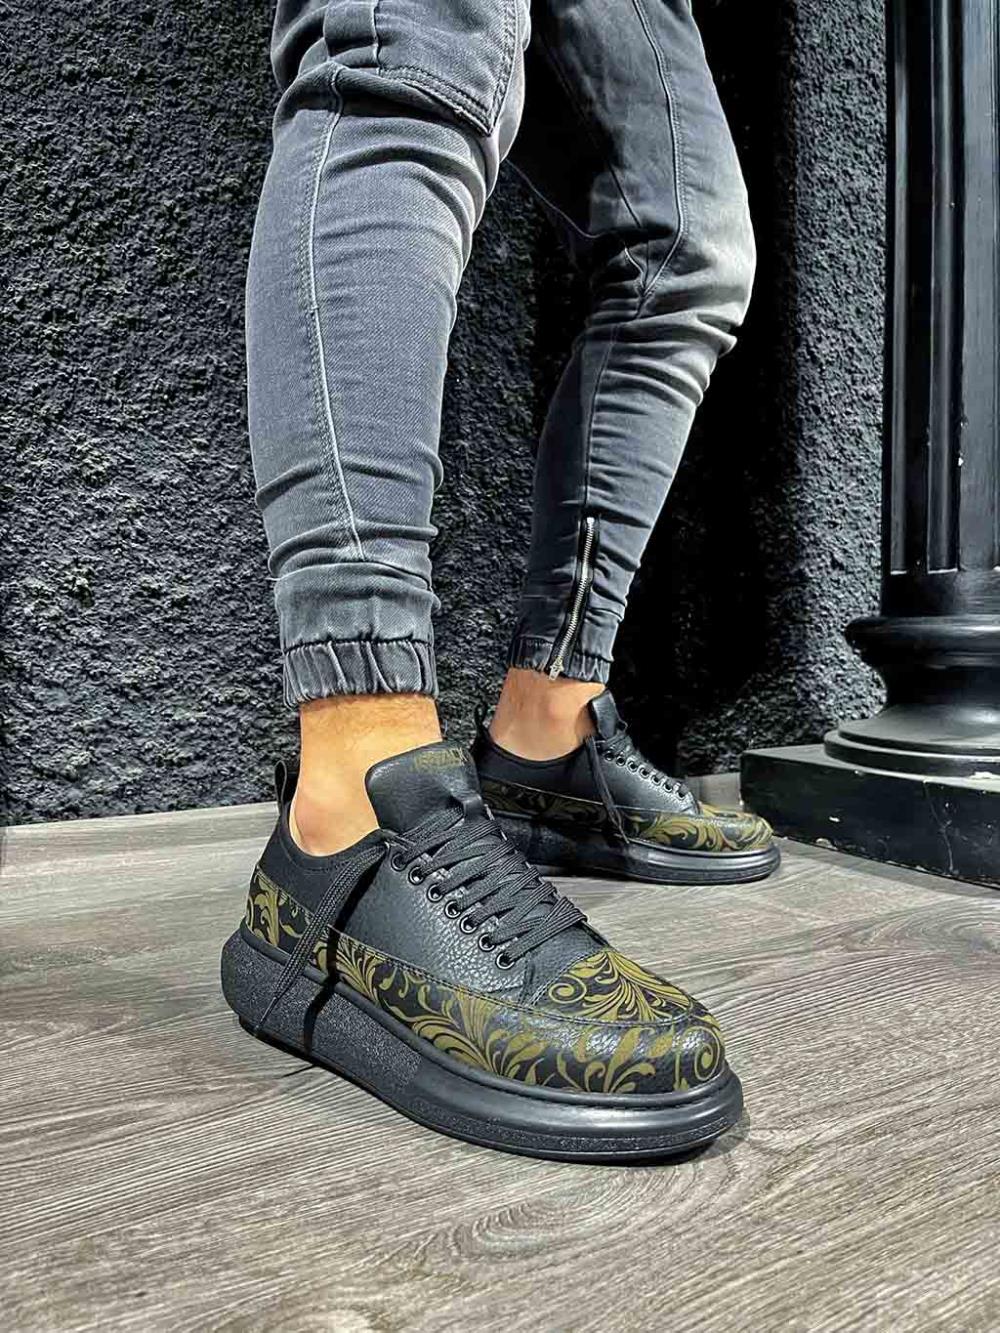 Knack Sneakers Ayakkabı 812 Siyah (Siyah Taban) m9032